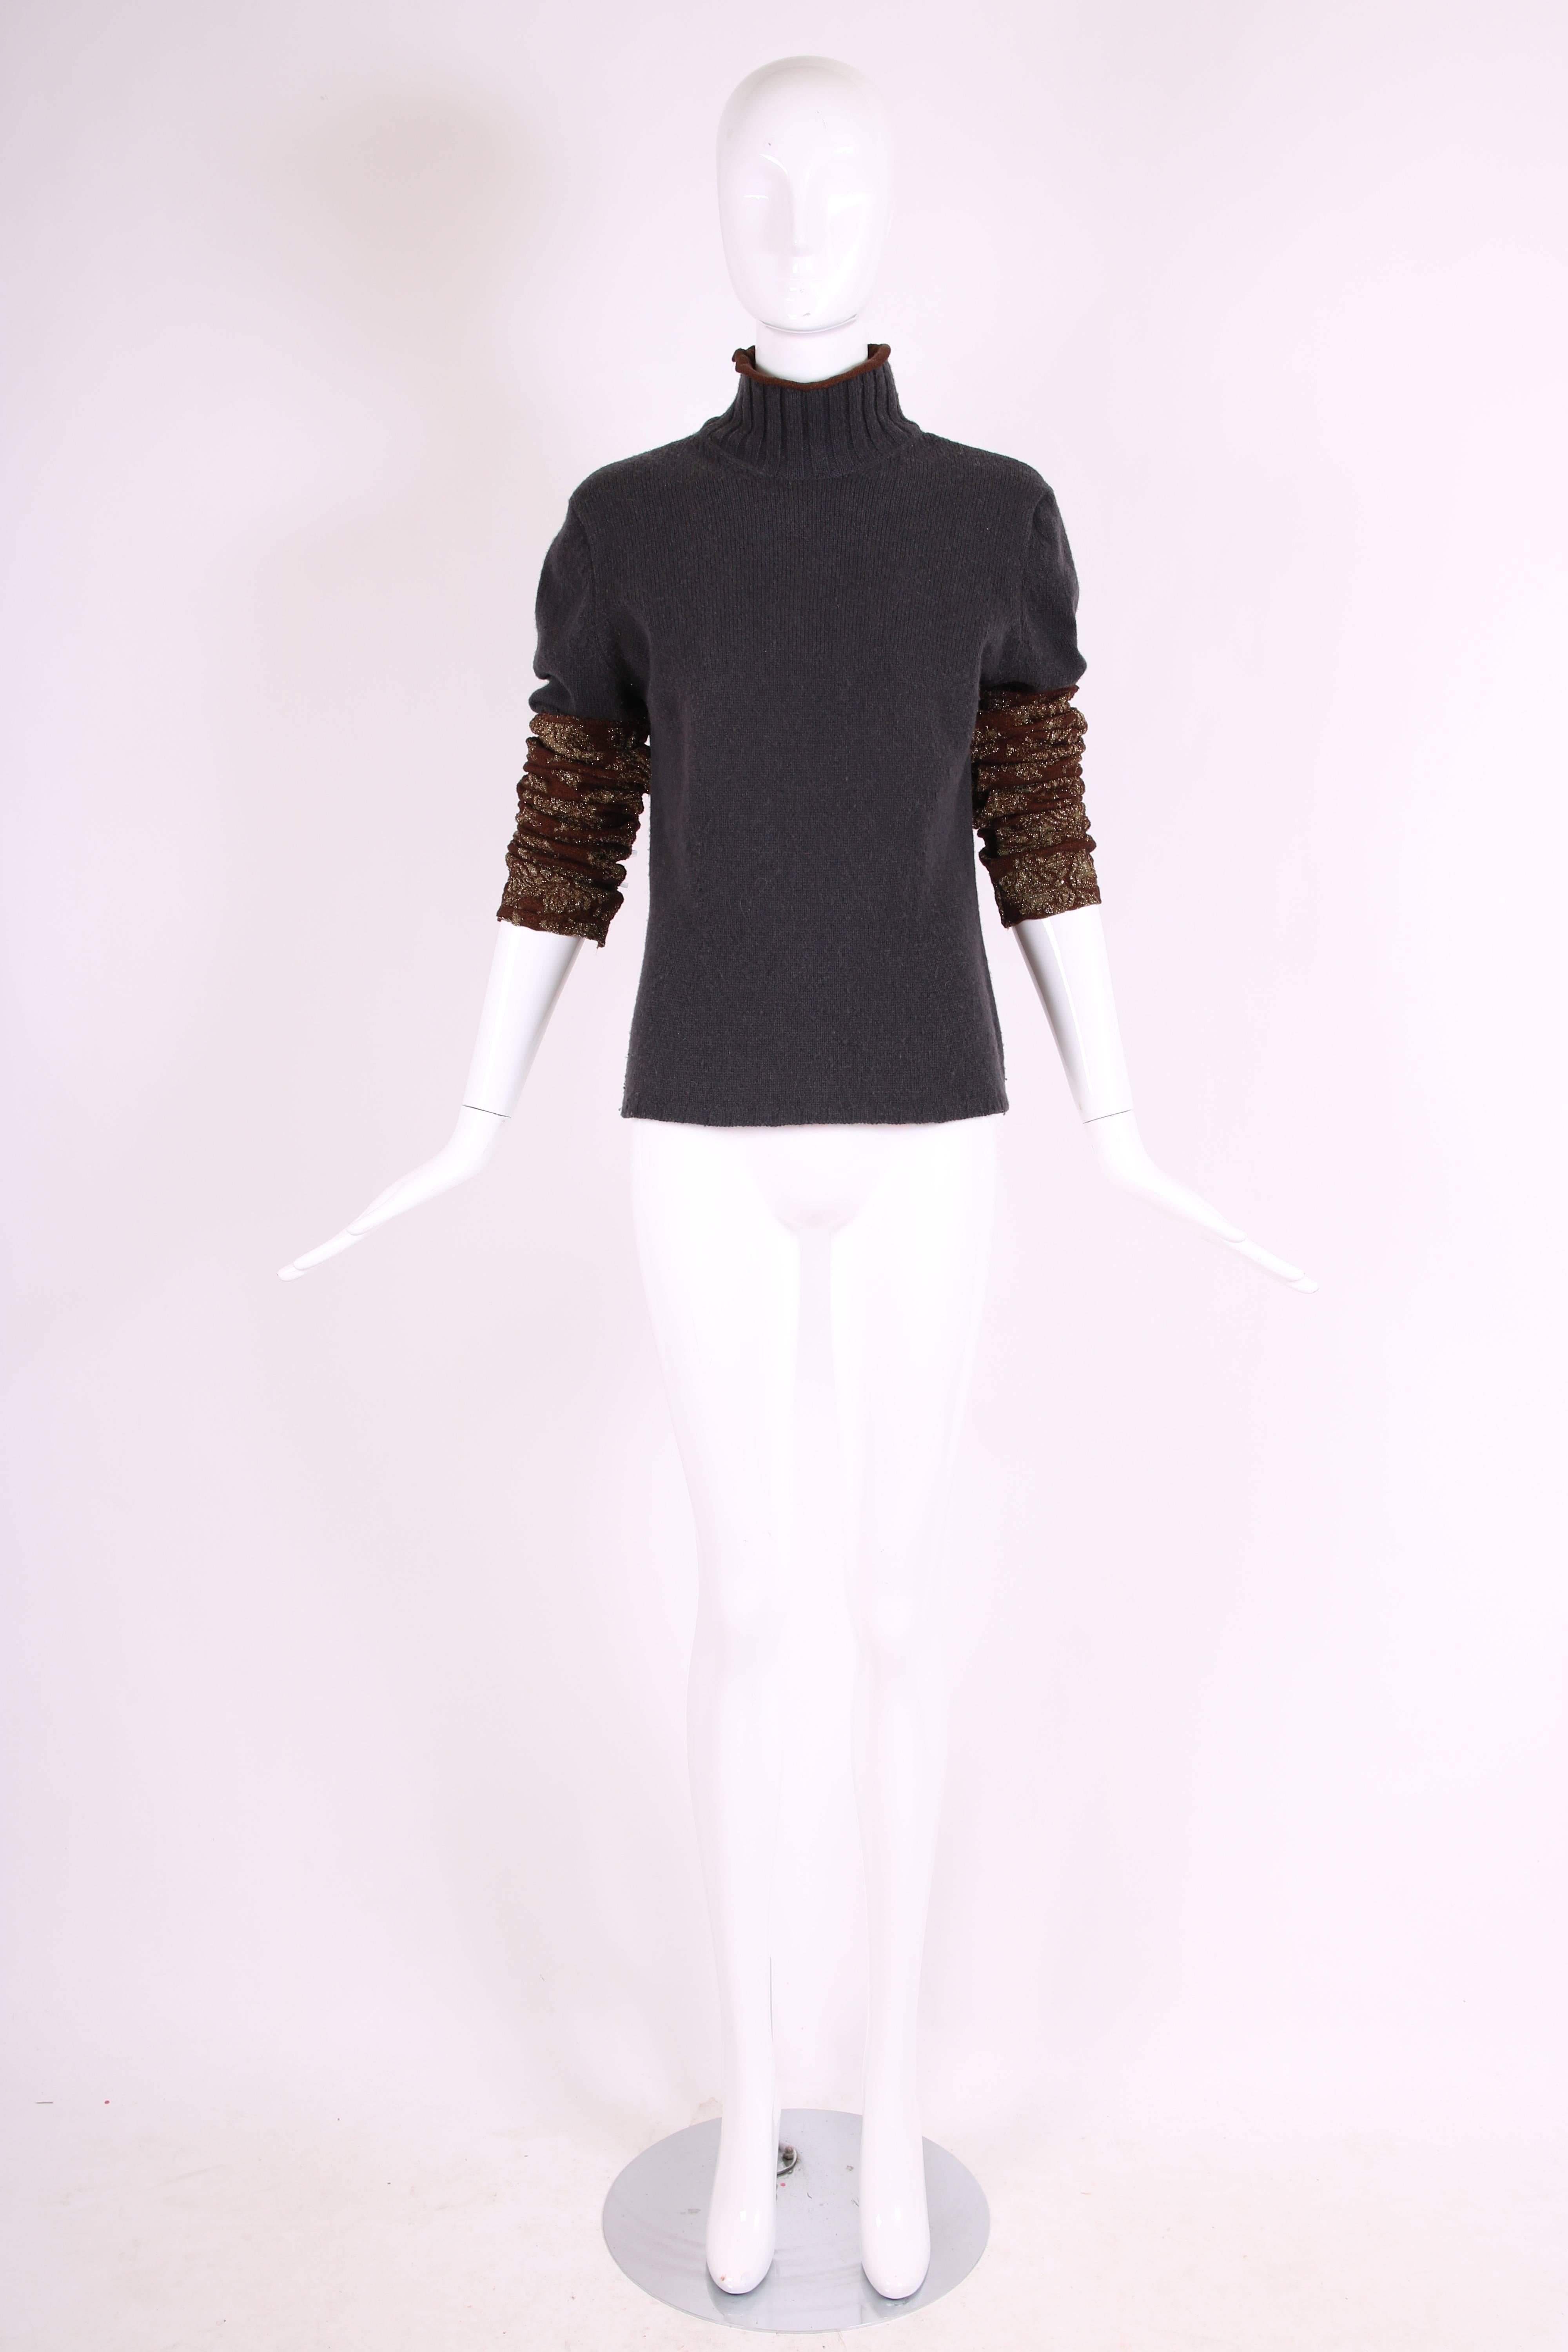 Dries Van Noten Charcoal Grey Wool Mock-Neck Sweater W/Metallic Folate Sleeves In Excellent Condition For Sale In Studio City, CA